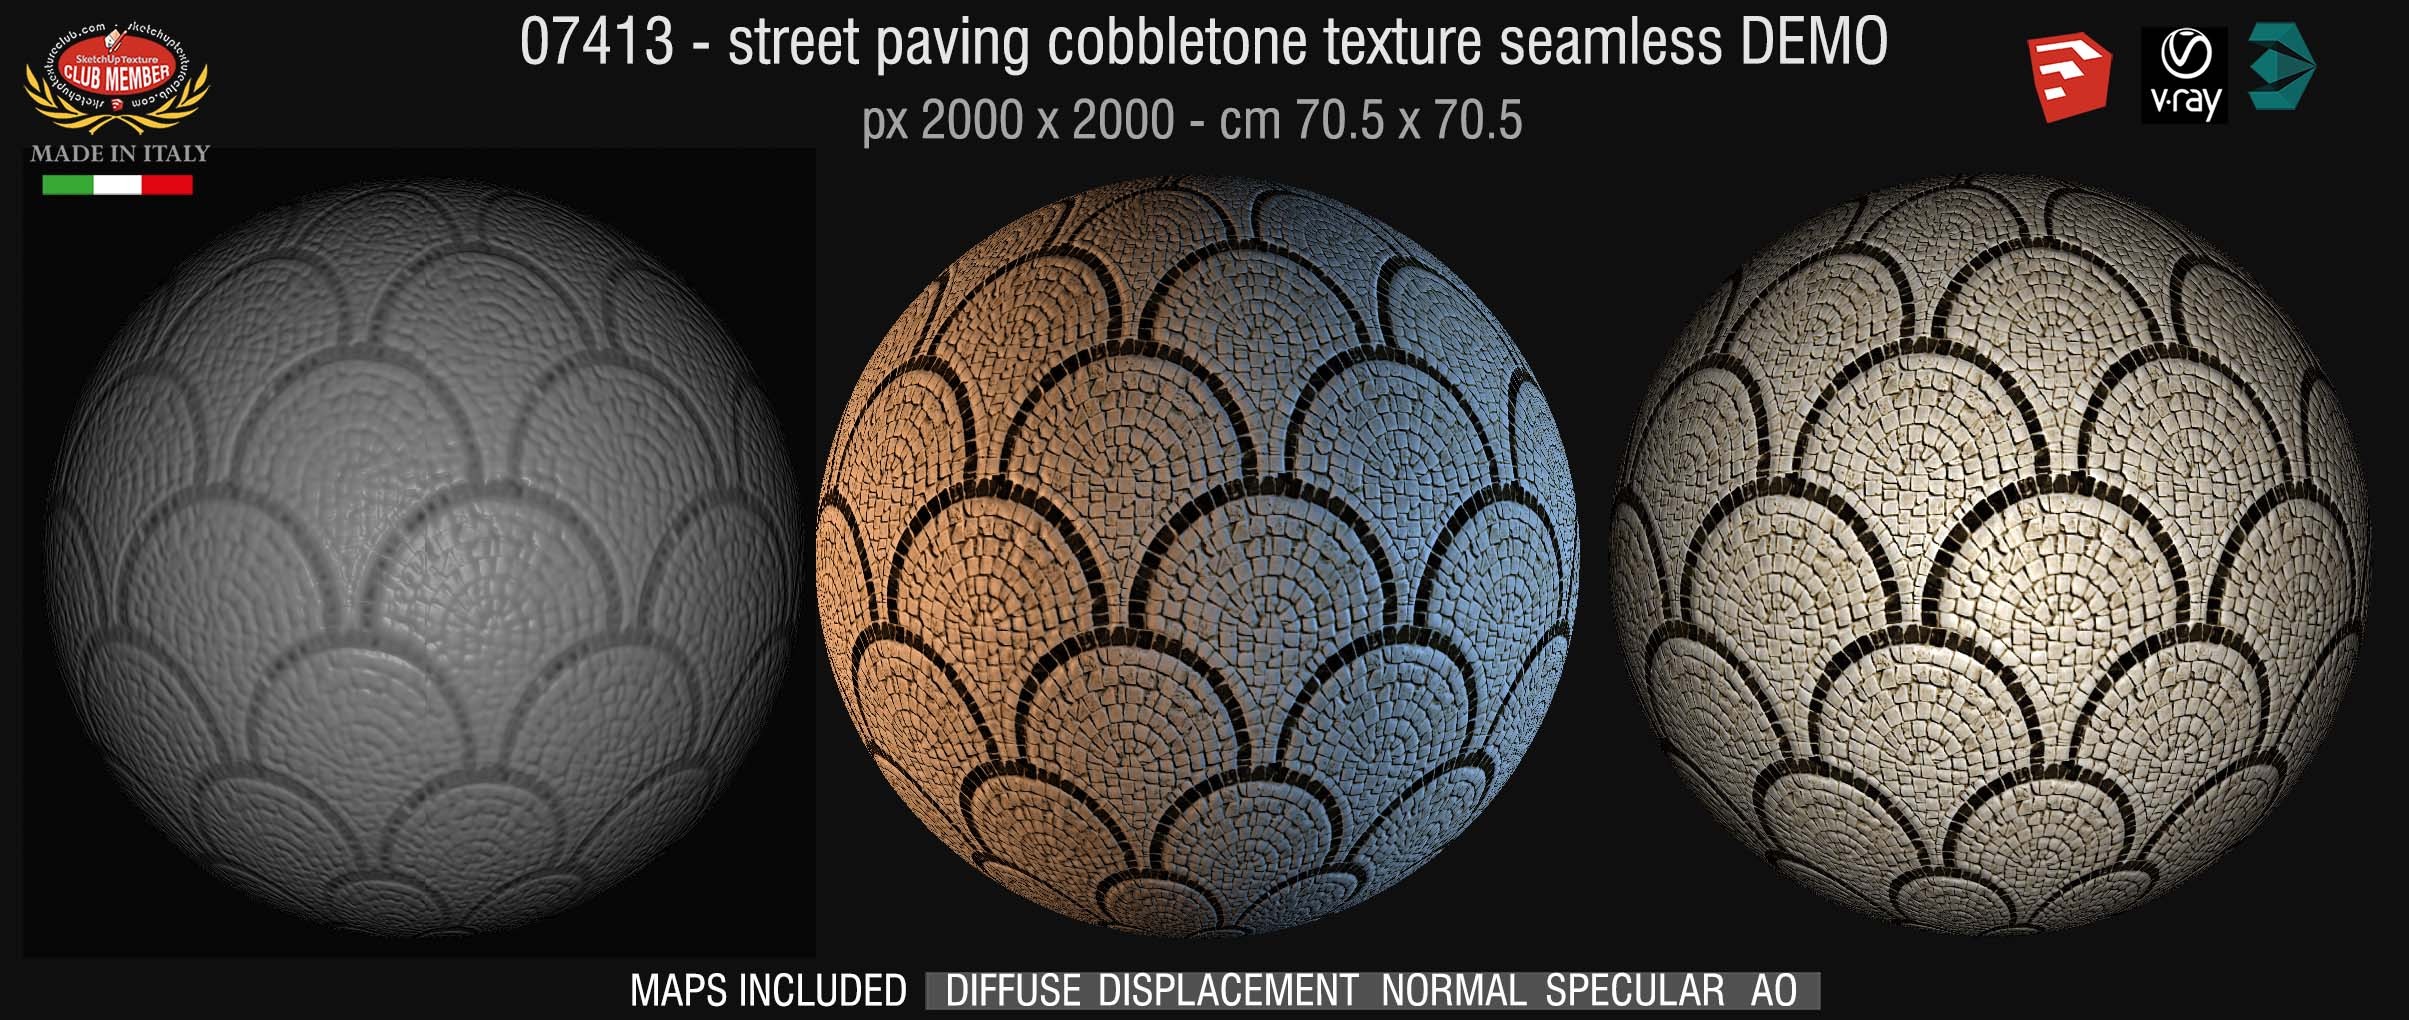 07413 HR Street paving cobblestone texture + maps DEMO